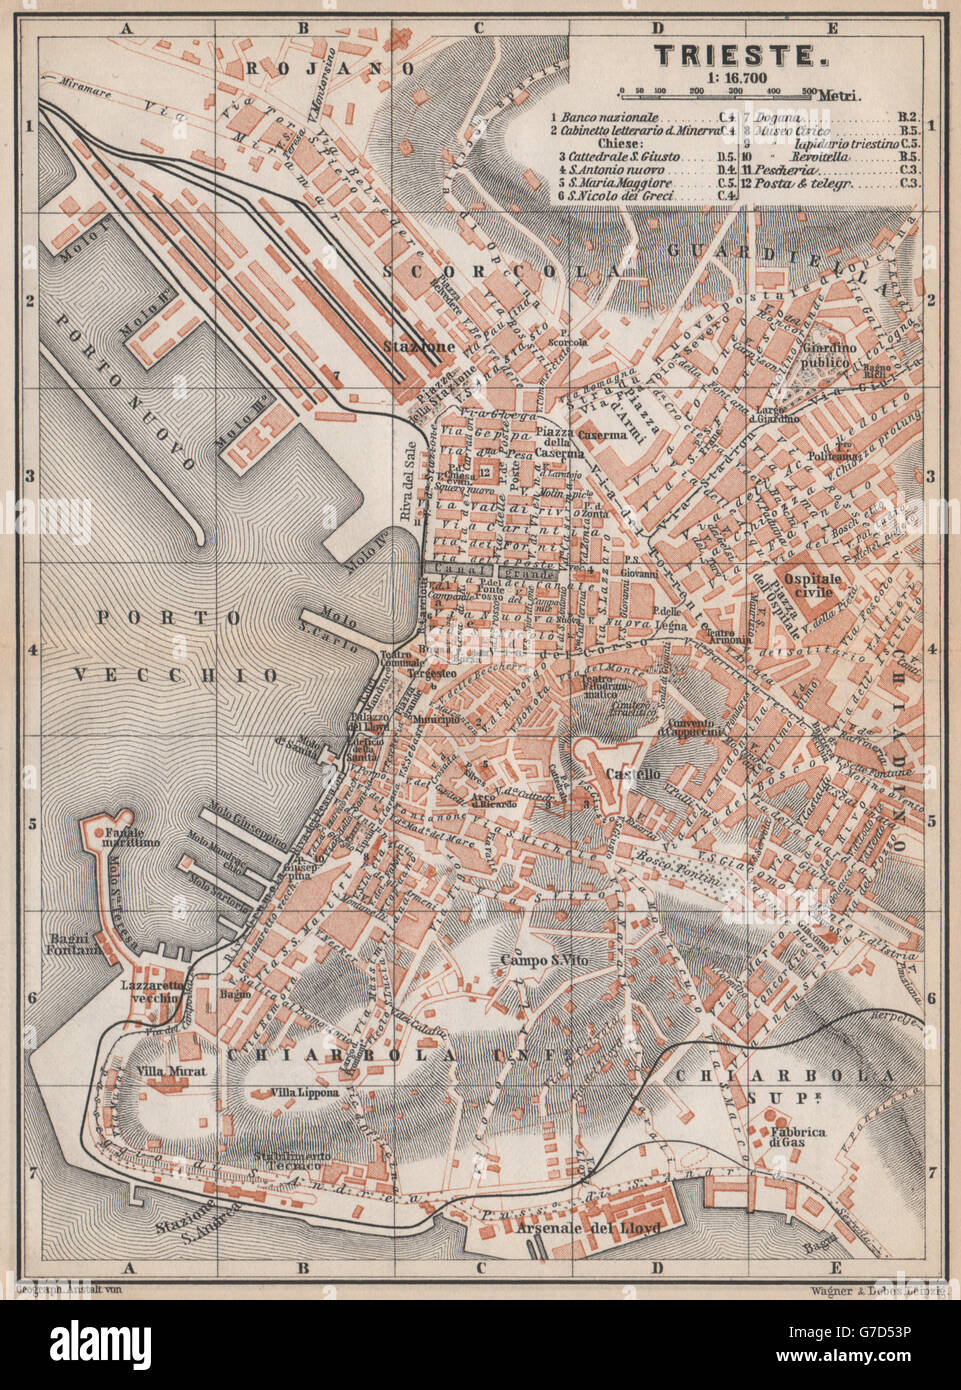 TRIESTE / TRST town city plan piano urbanistico. Italy Italia mappa, 1896  Stock Photo - Alamy